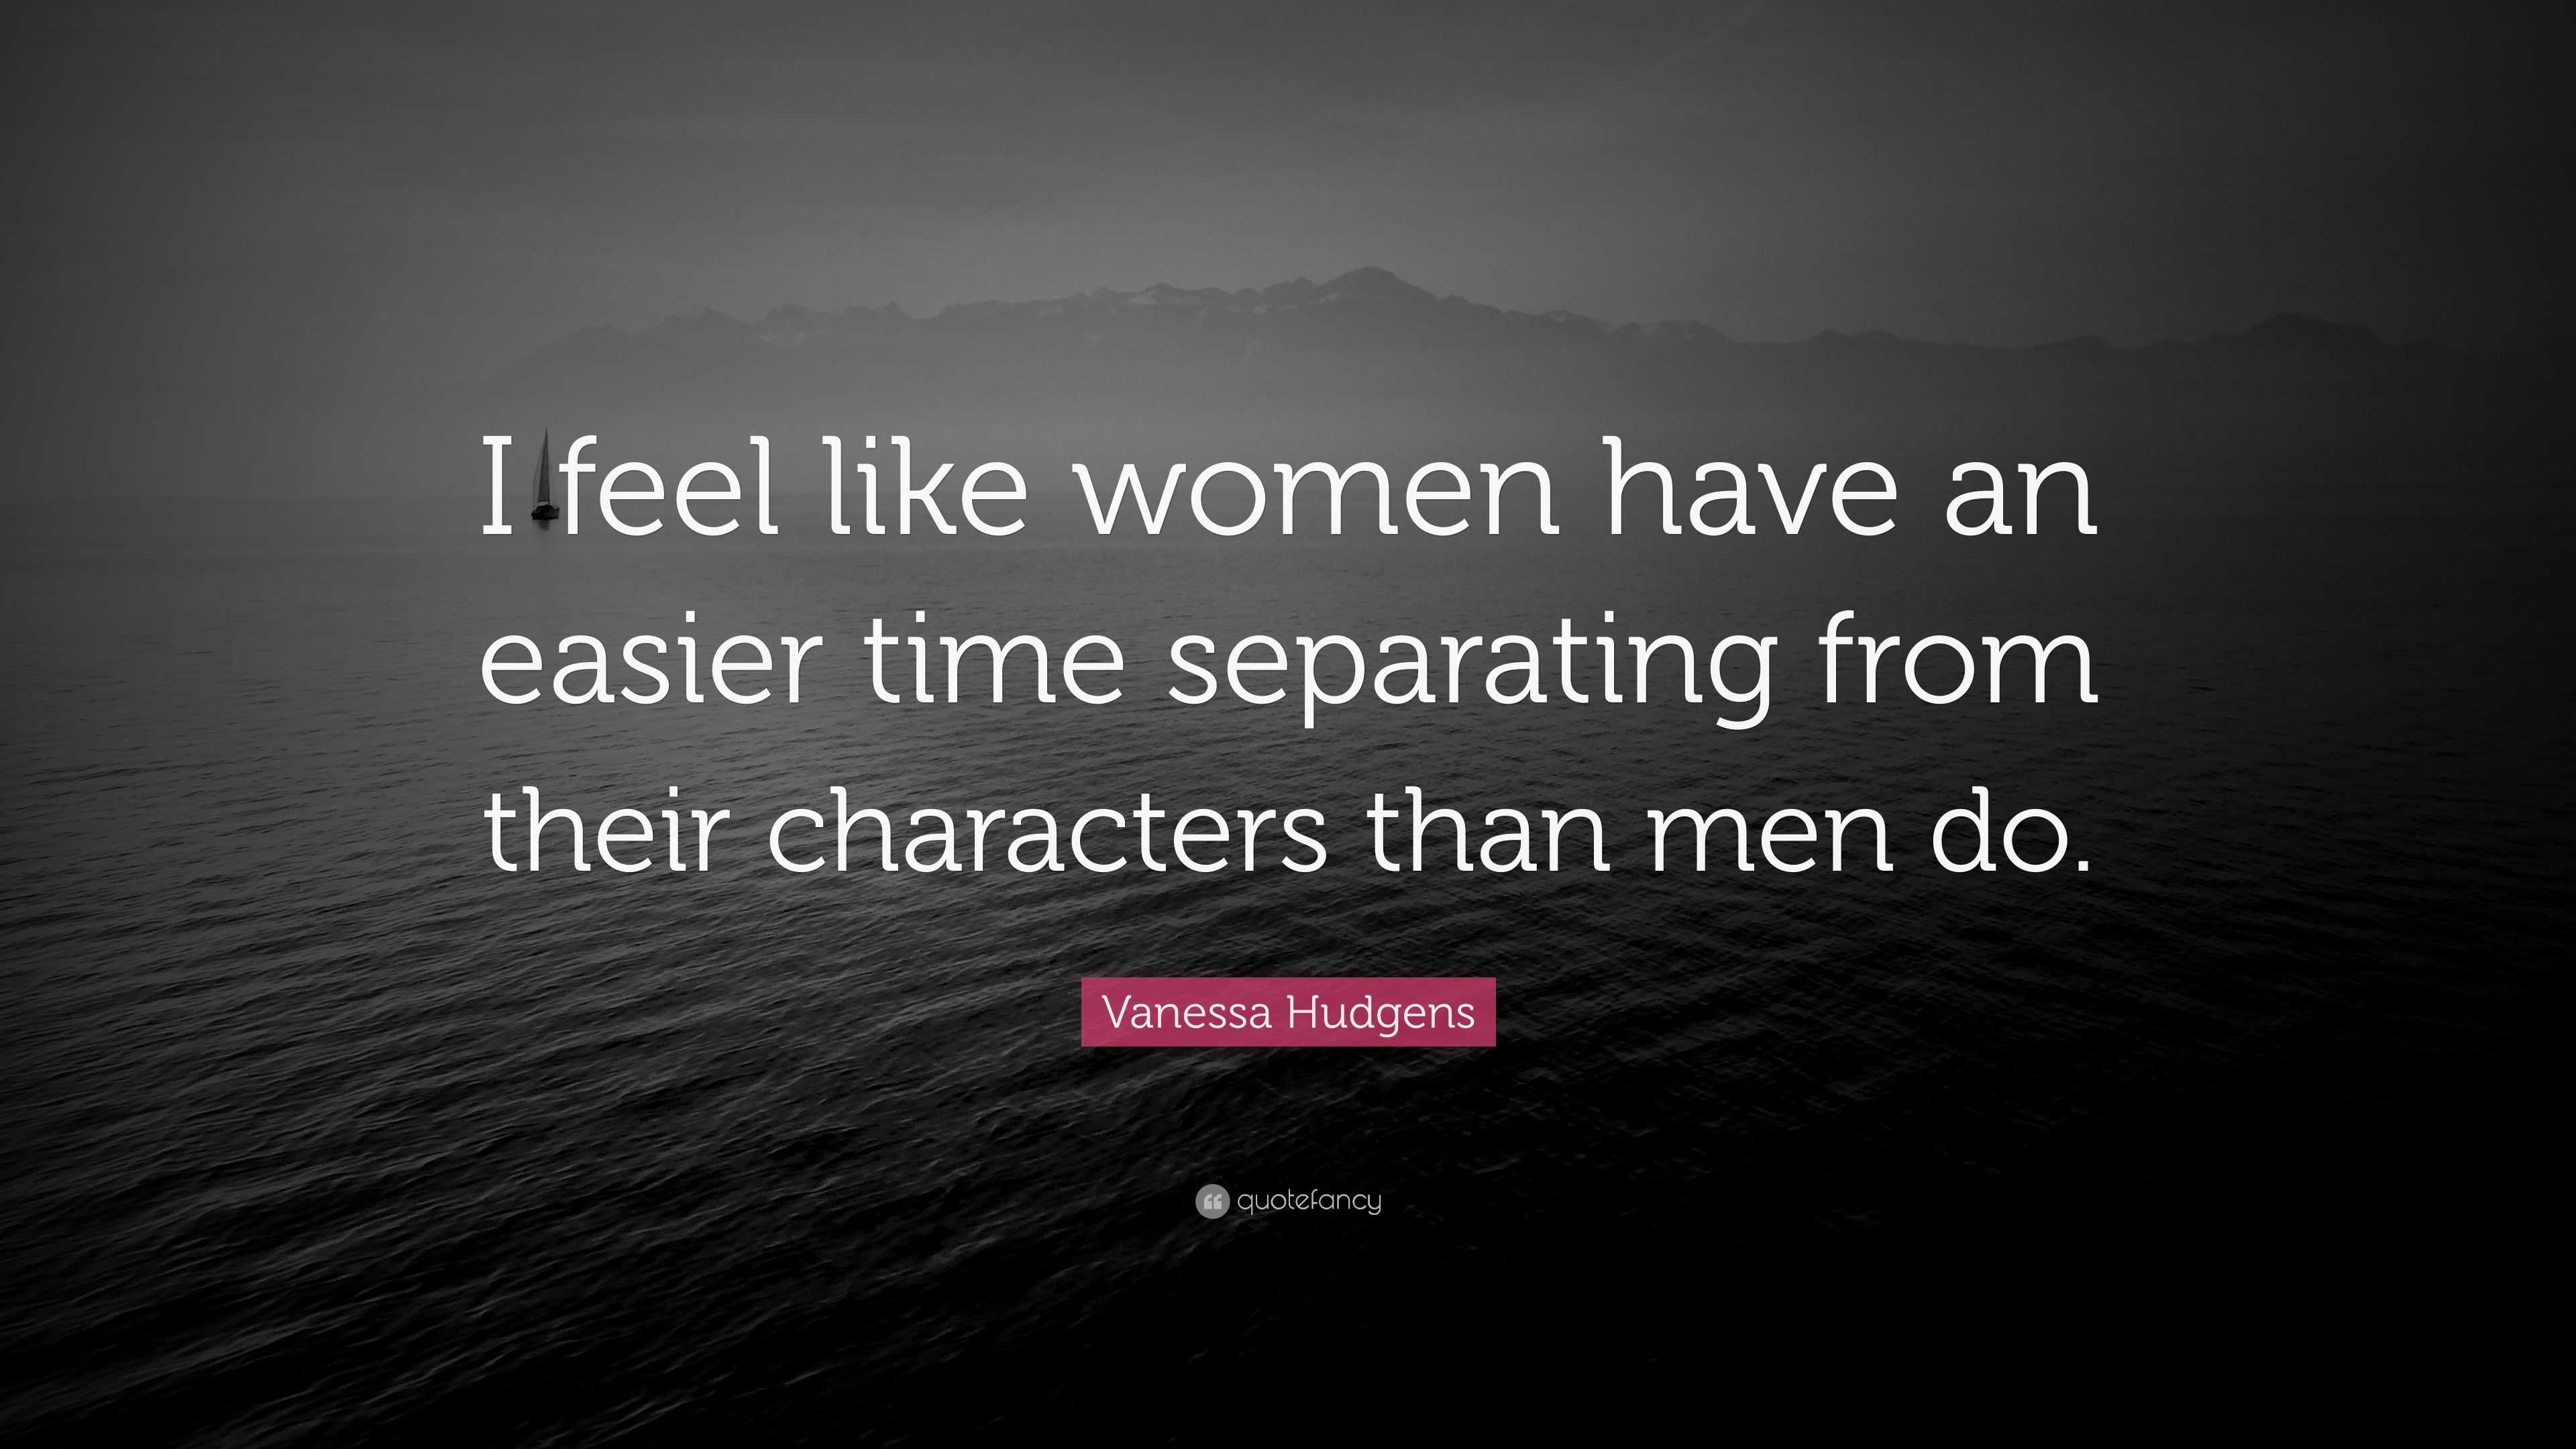 Vanessa Hudgens Quote: “I feel like women have an easier time ...